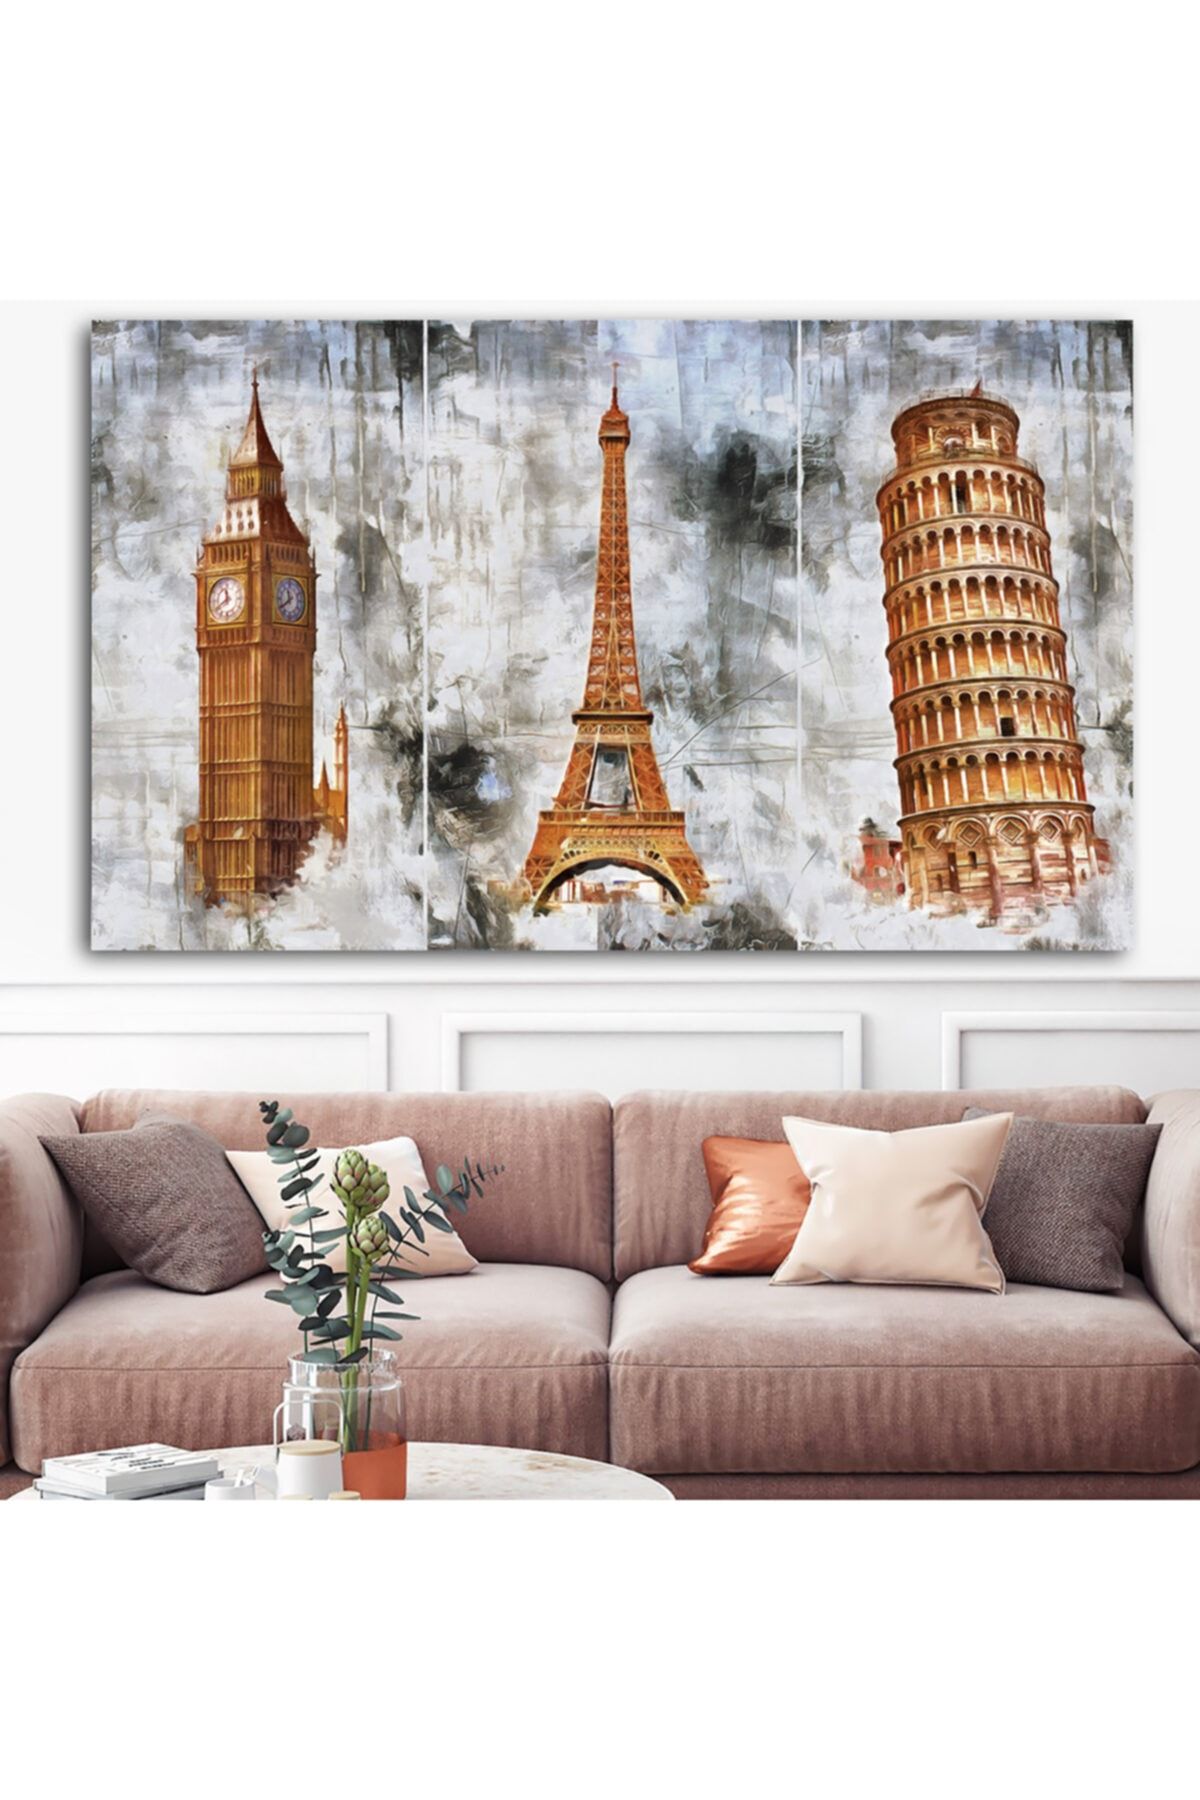 Sebenta Extra Dev Boyut Dekoratif Big Ben Eiffel Pisa Kuleleri Kanvas Tablo (100cm X 150cm)